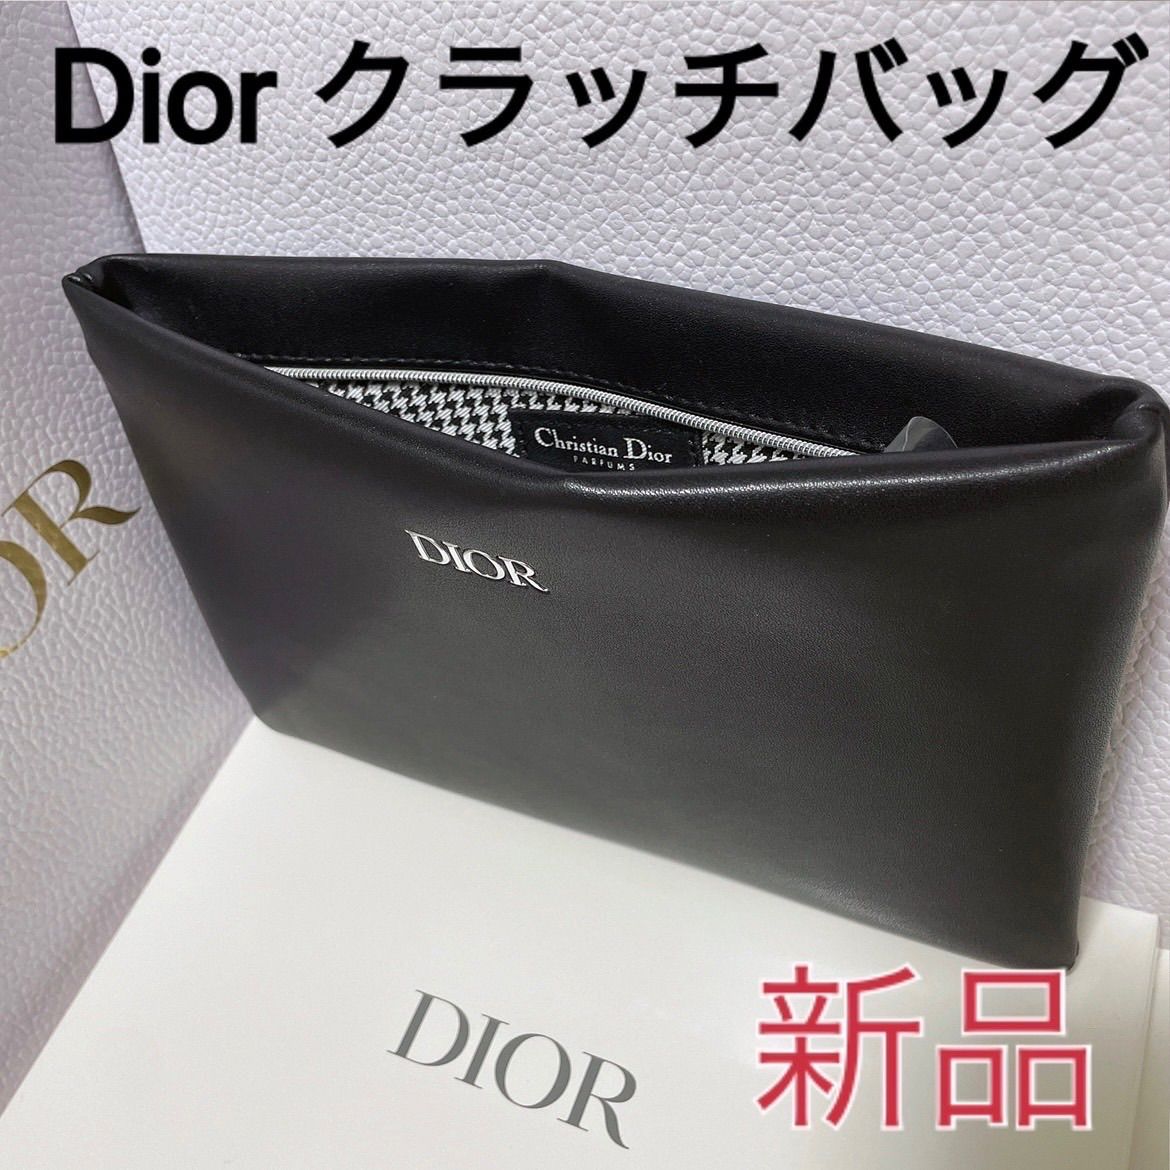 Dior ディオール メンズ ブランド クラッチバッグ バッグ ブラック